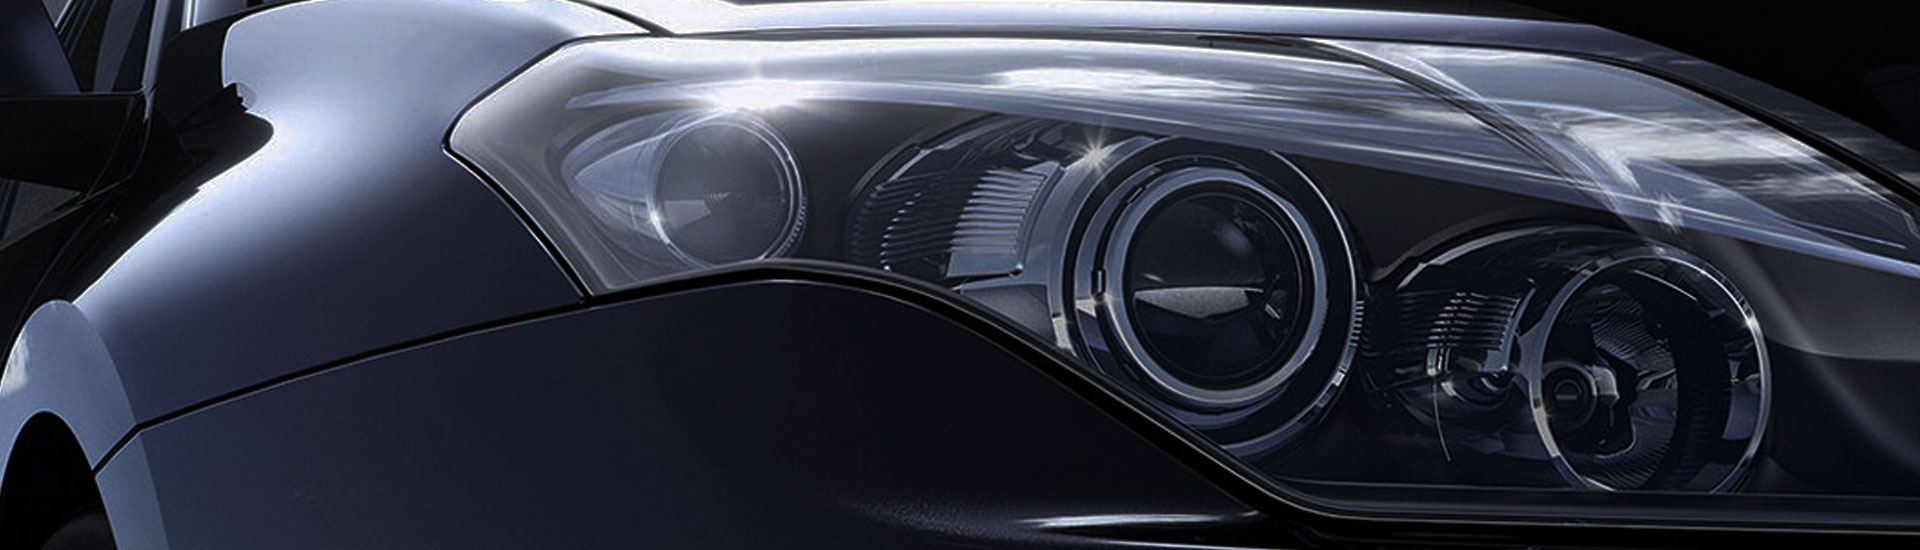 BMW X6 Headlight Tint Covers